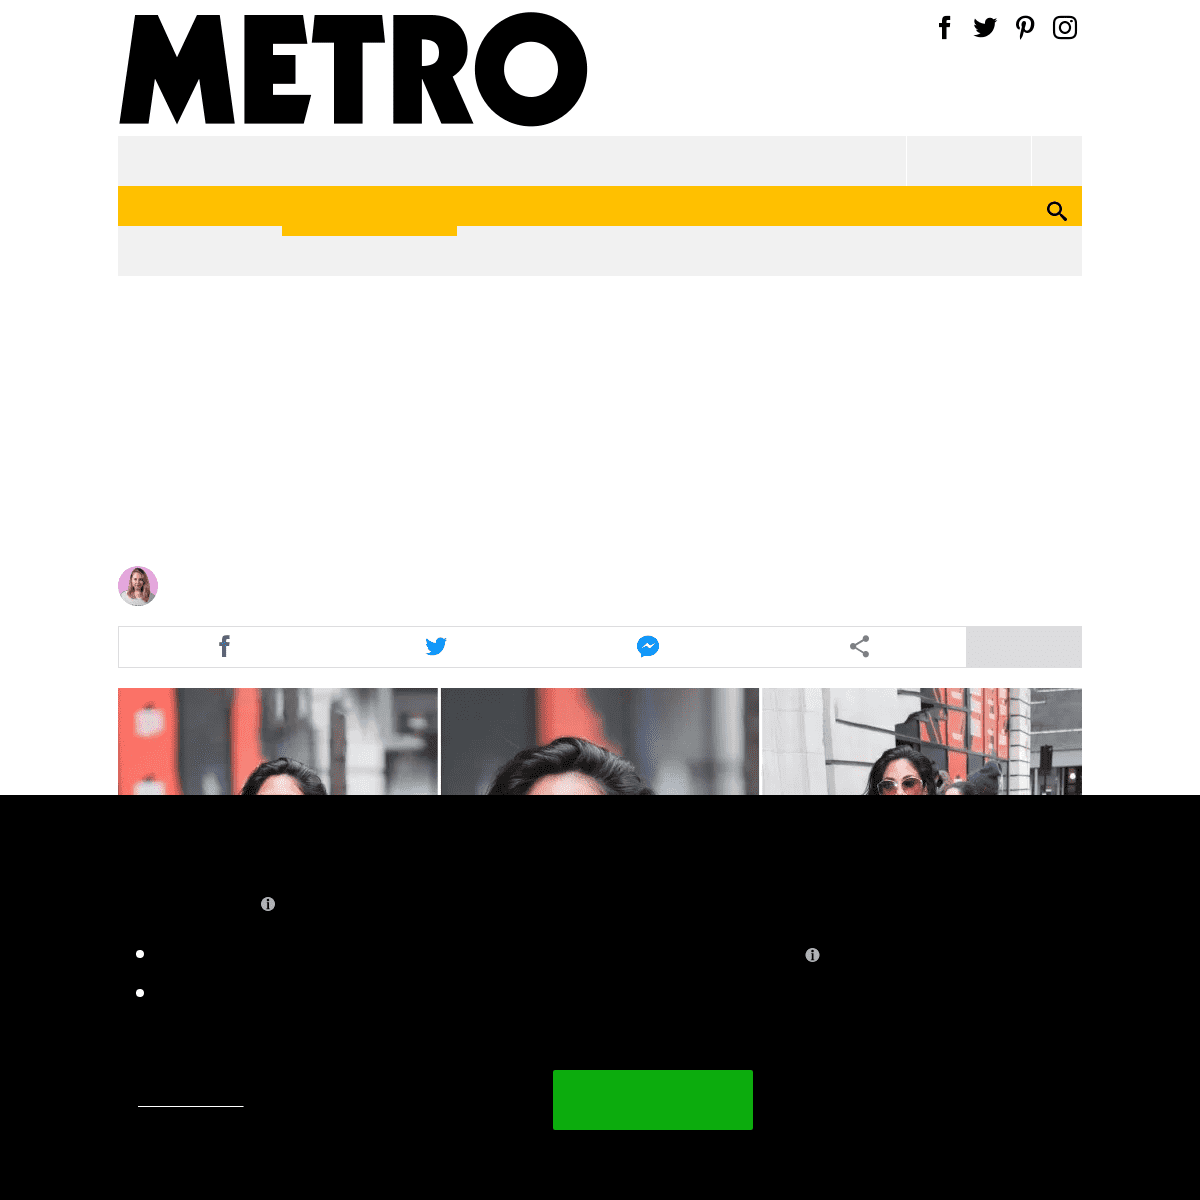 A complete backup of metro.co.uk/2020/02/26/nicole-scherzinger-follows-ant-decs-style-advice-suits-london-12308784/